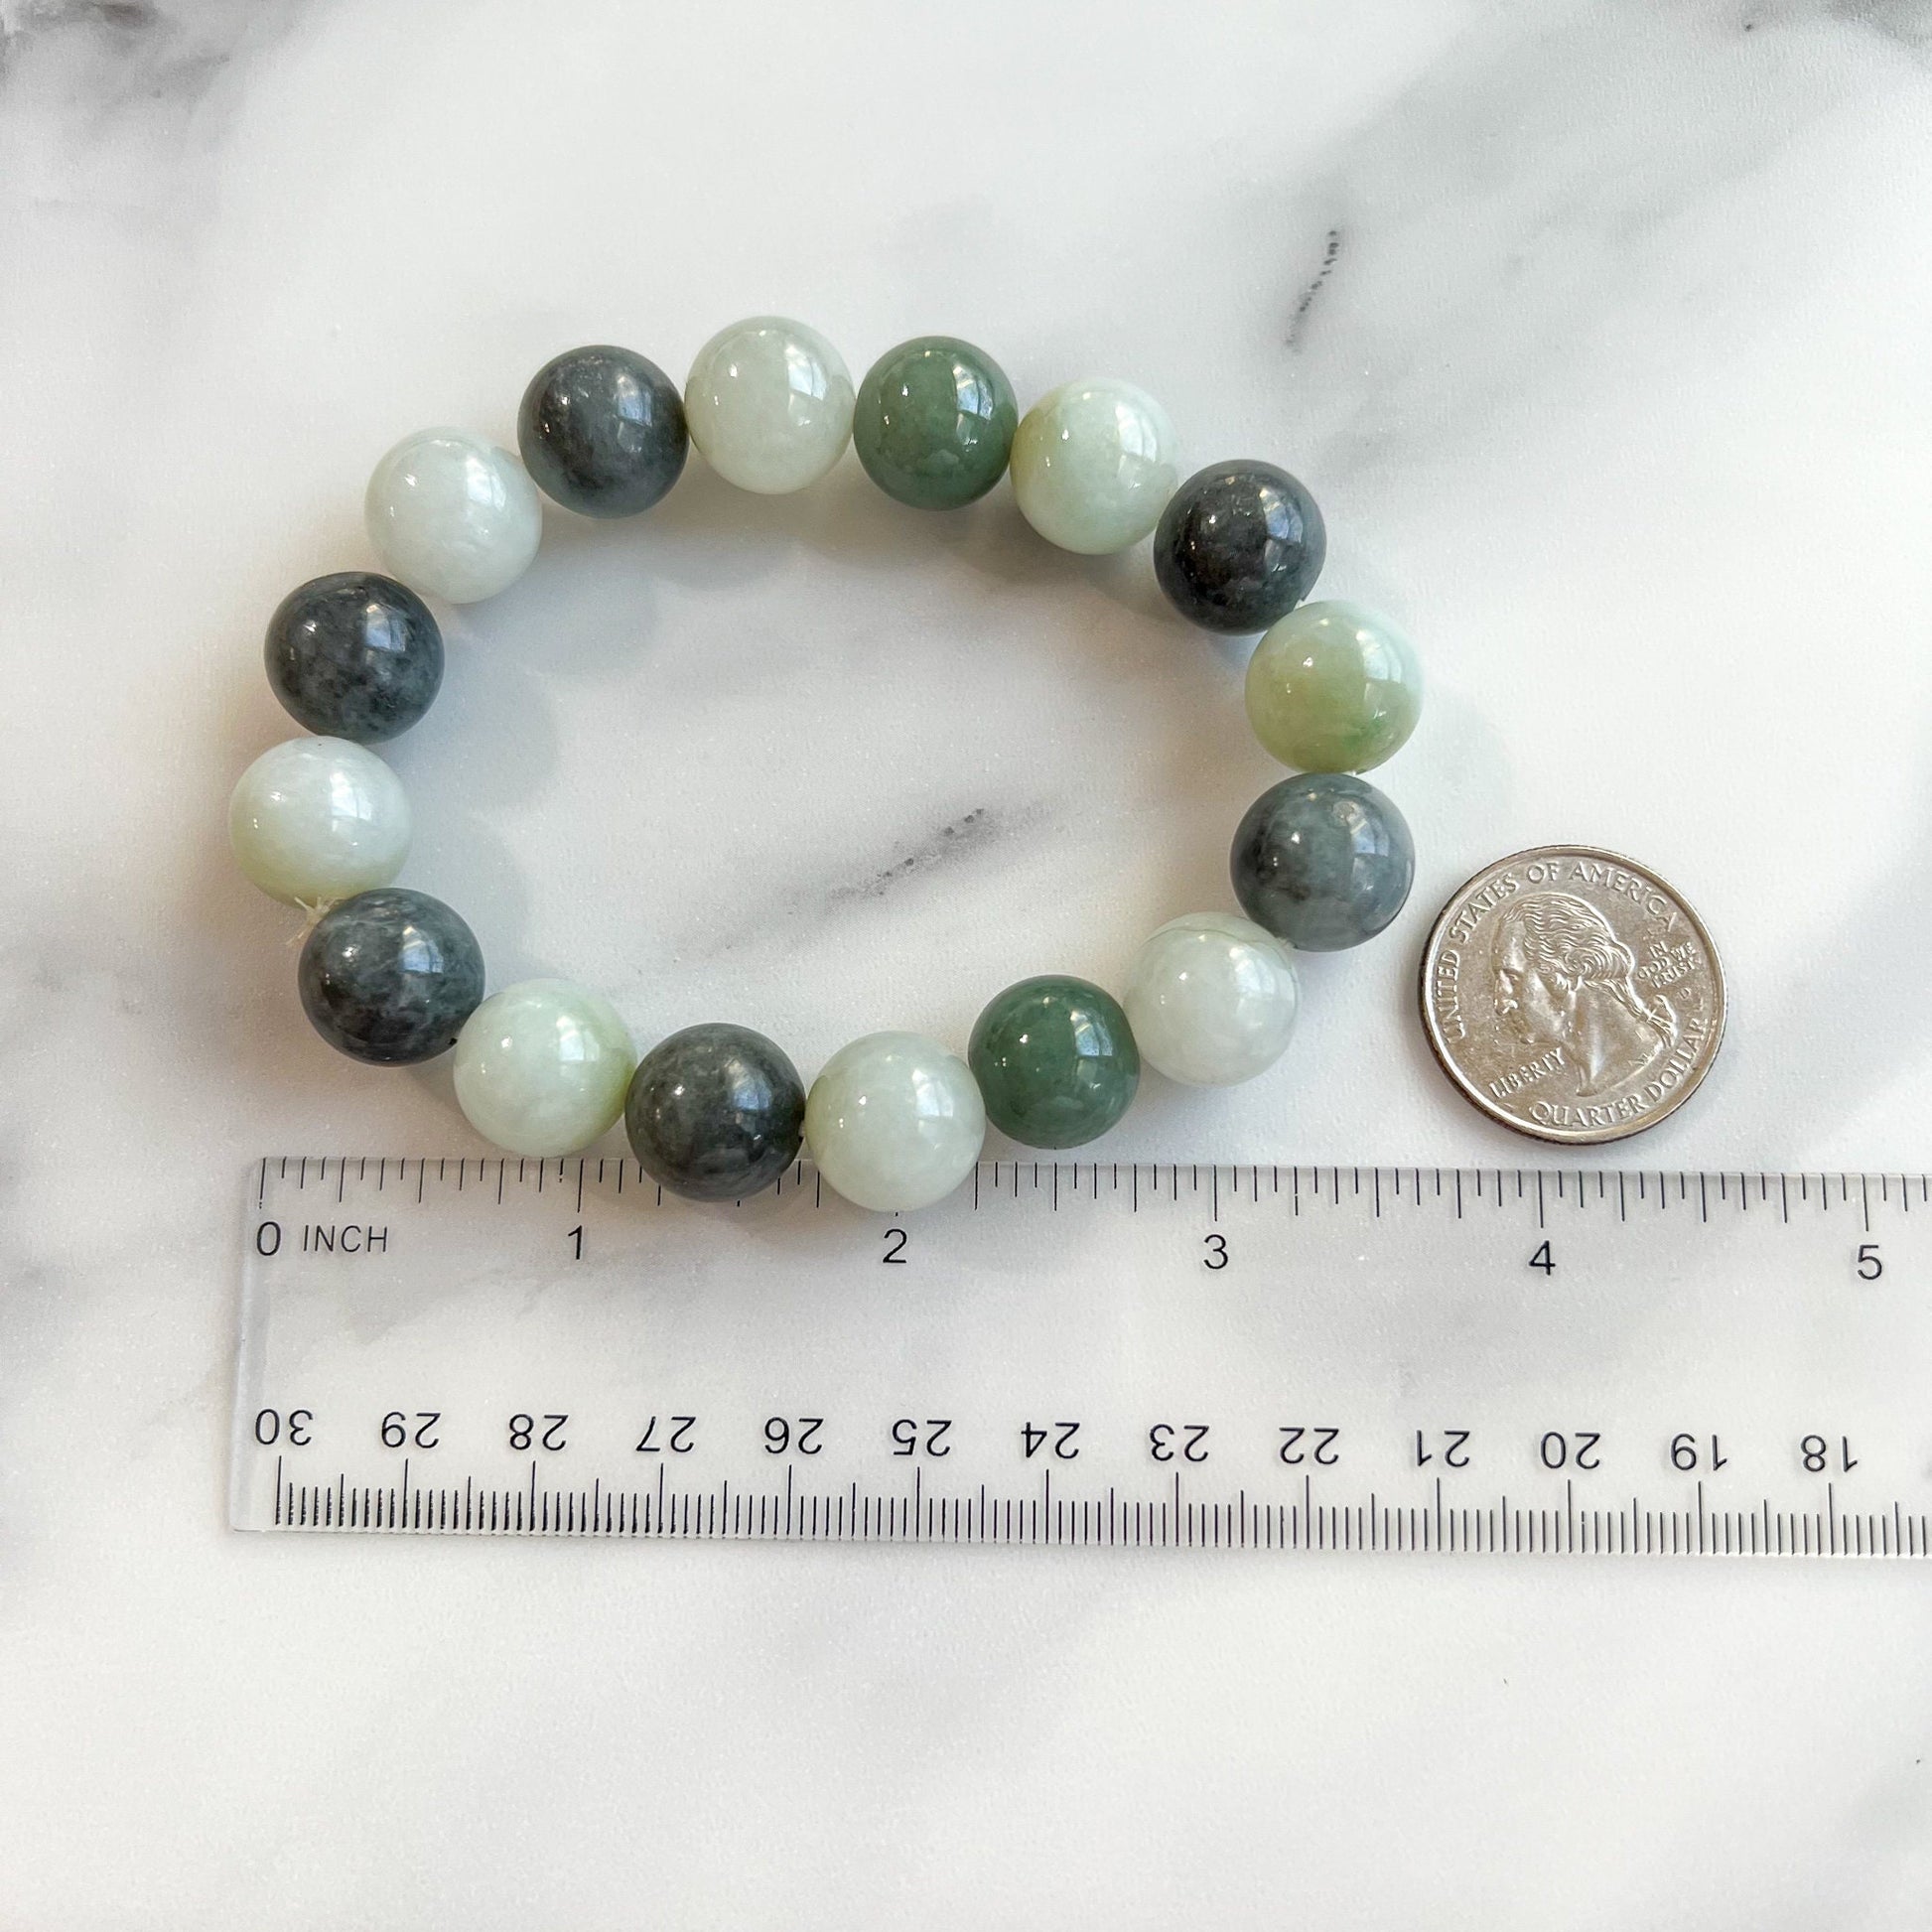 14 mm Jadeite Jade Large Round Beaded Bracelet, Green, Gray, Black Jade Bracelet, MDFM-0822-1670129480 - AriaDesignCollection